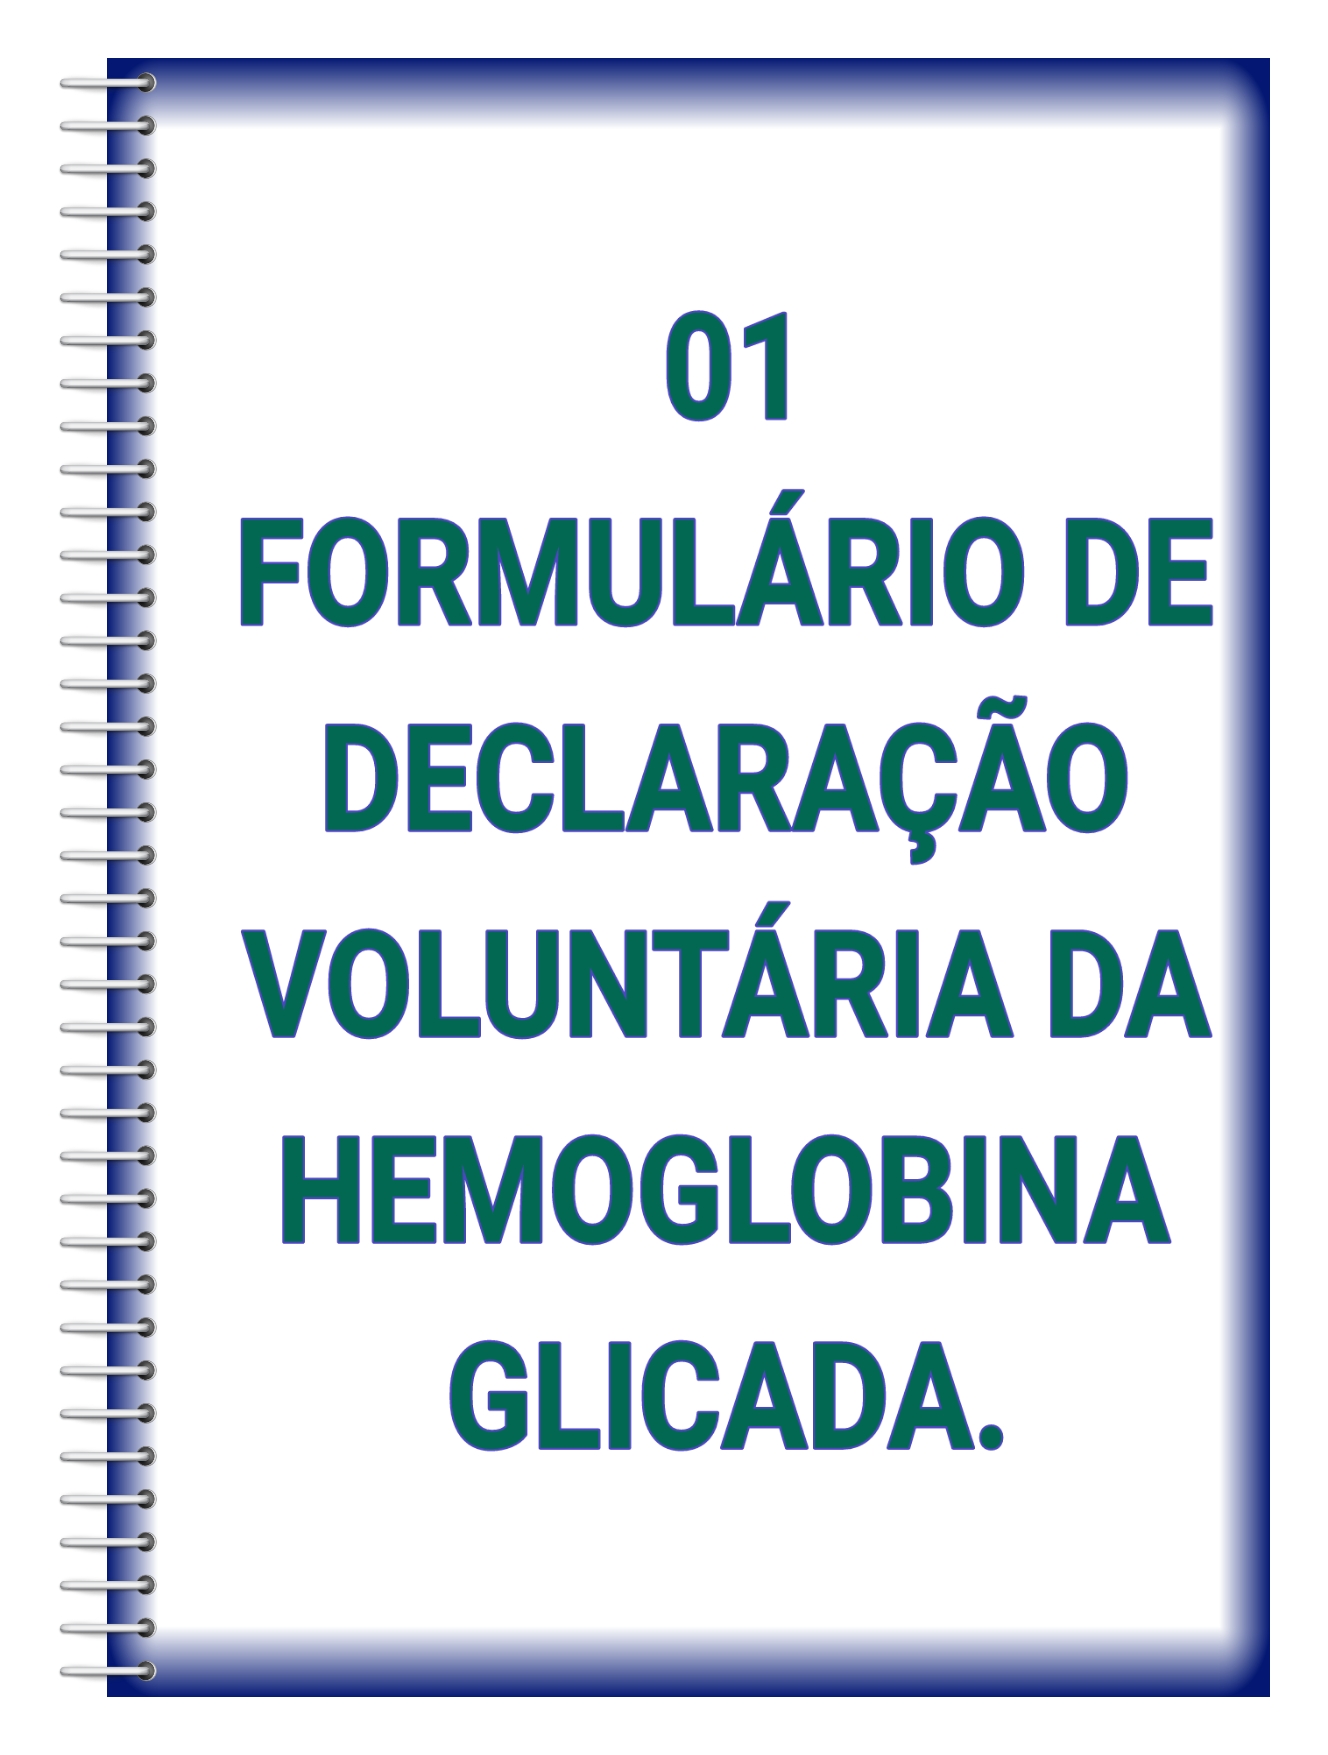 Formulrio da Hemoglobina Glicada